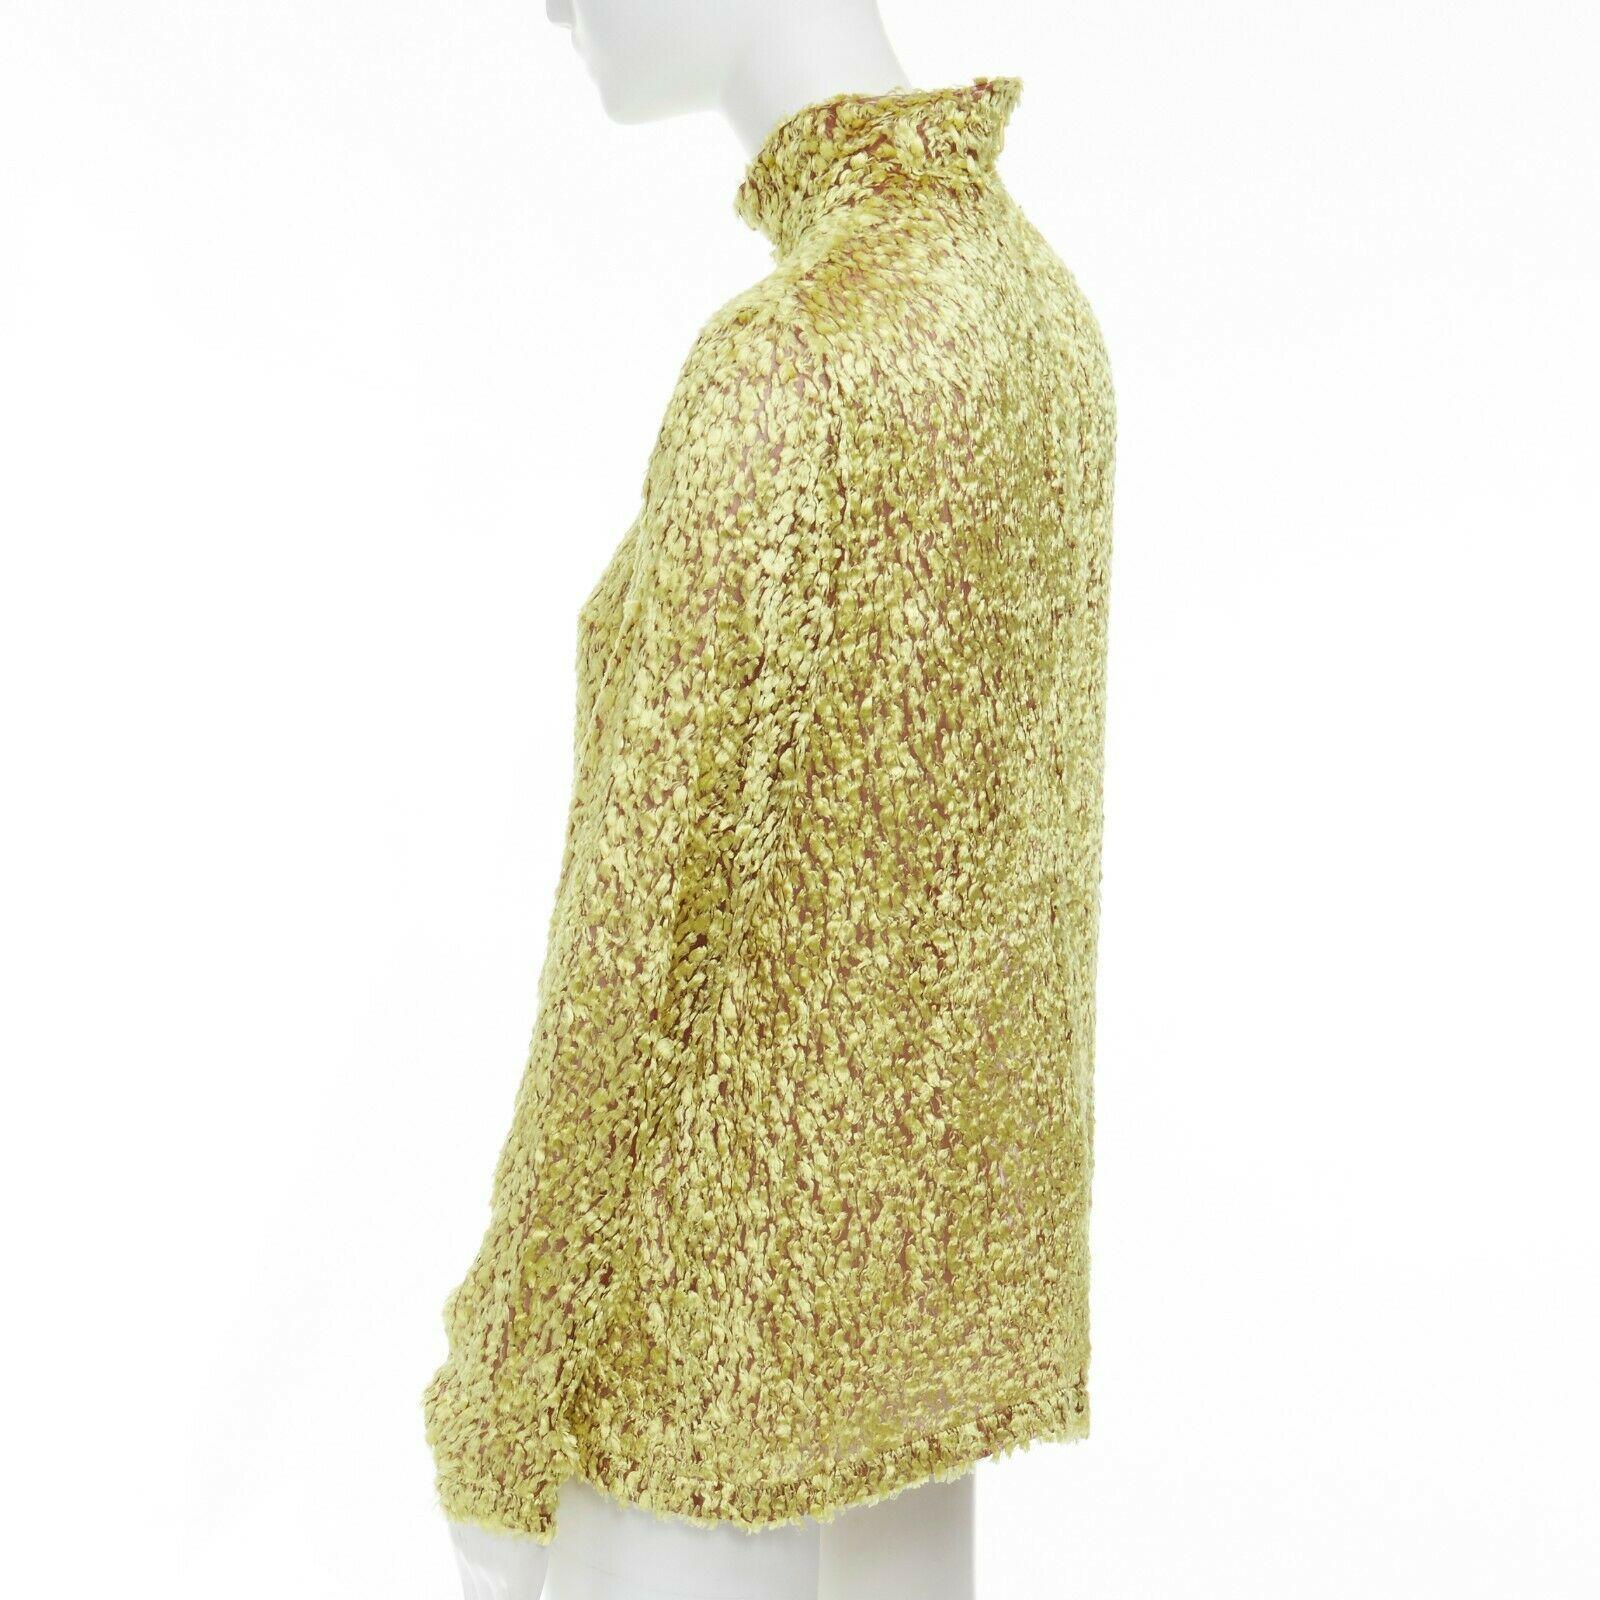 Women's CELINE PHOEBE PHILO yellow fluffy yarn embellished mock neck top FR40 M